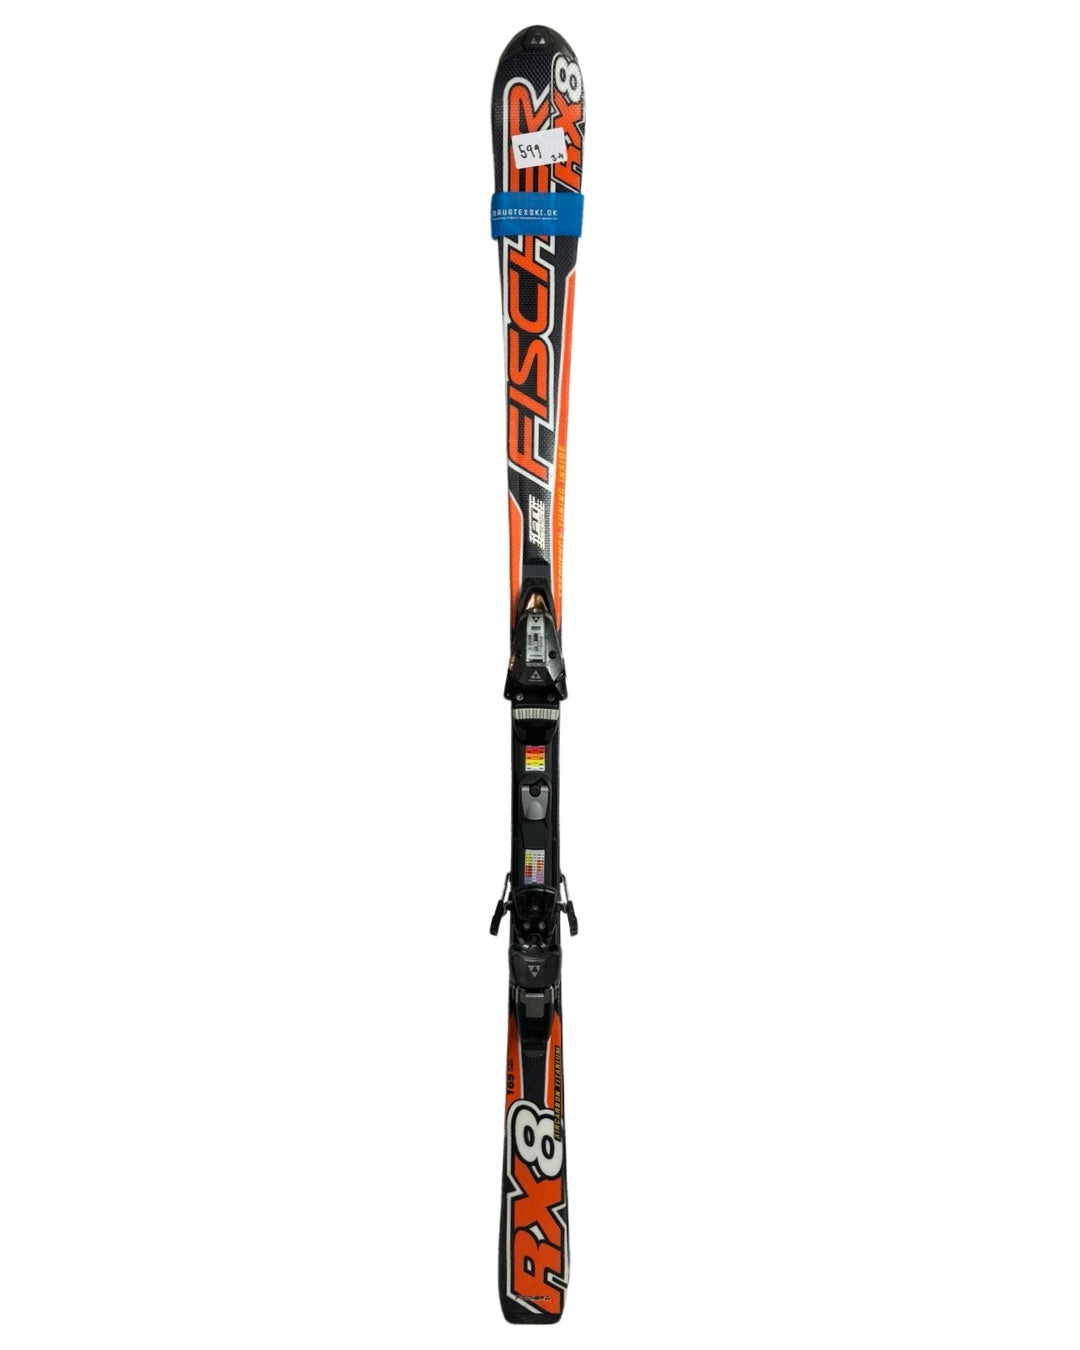 Voksen ski - blandet 599 3